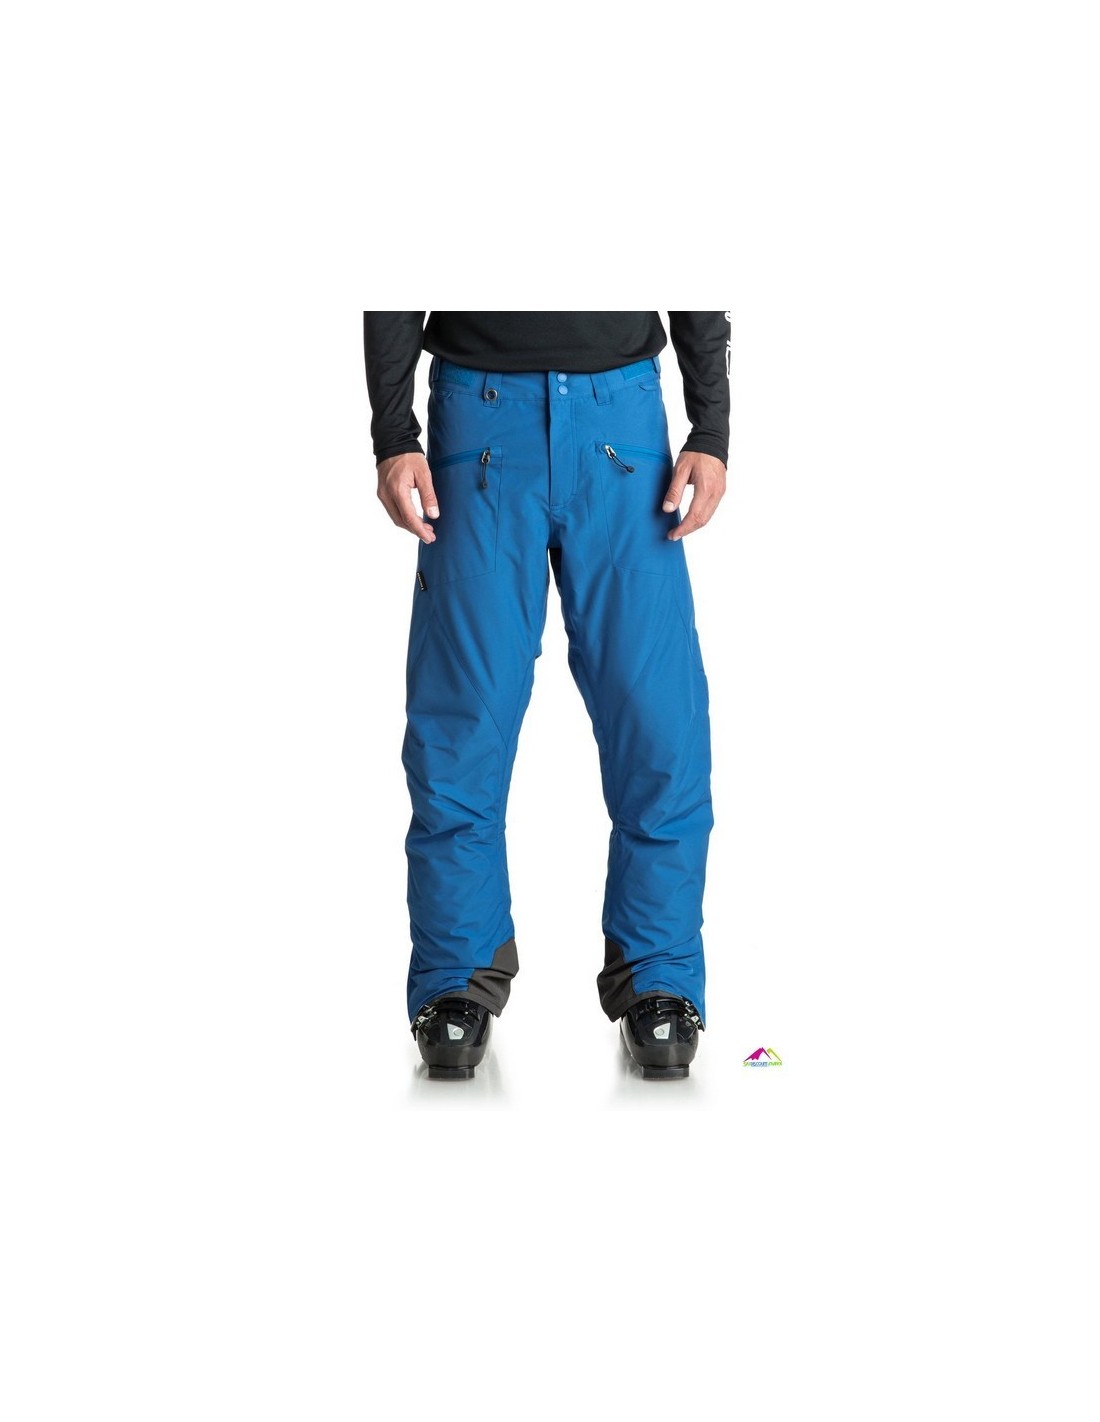 Pantalon Ski/Snow Quiksilver Boundry Blue 2018 Taille XL